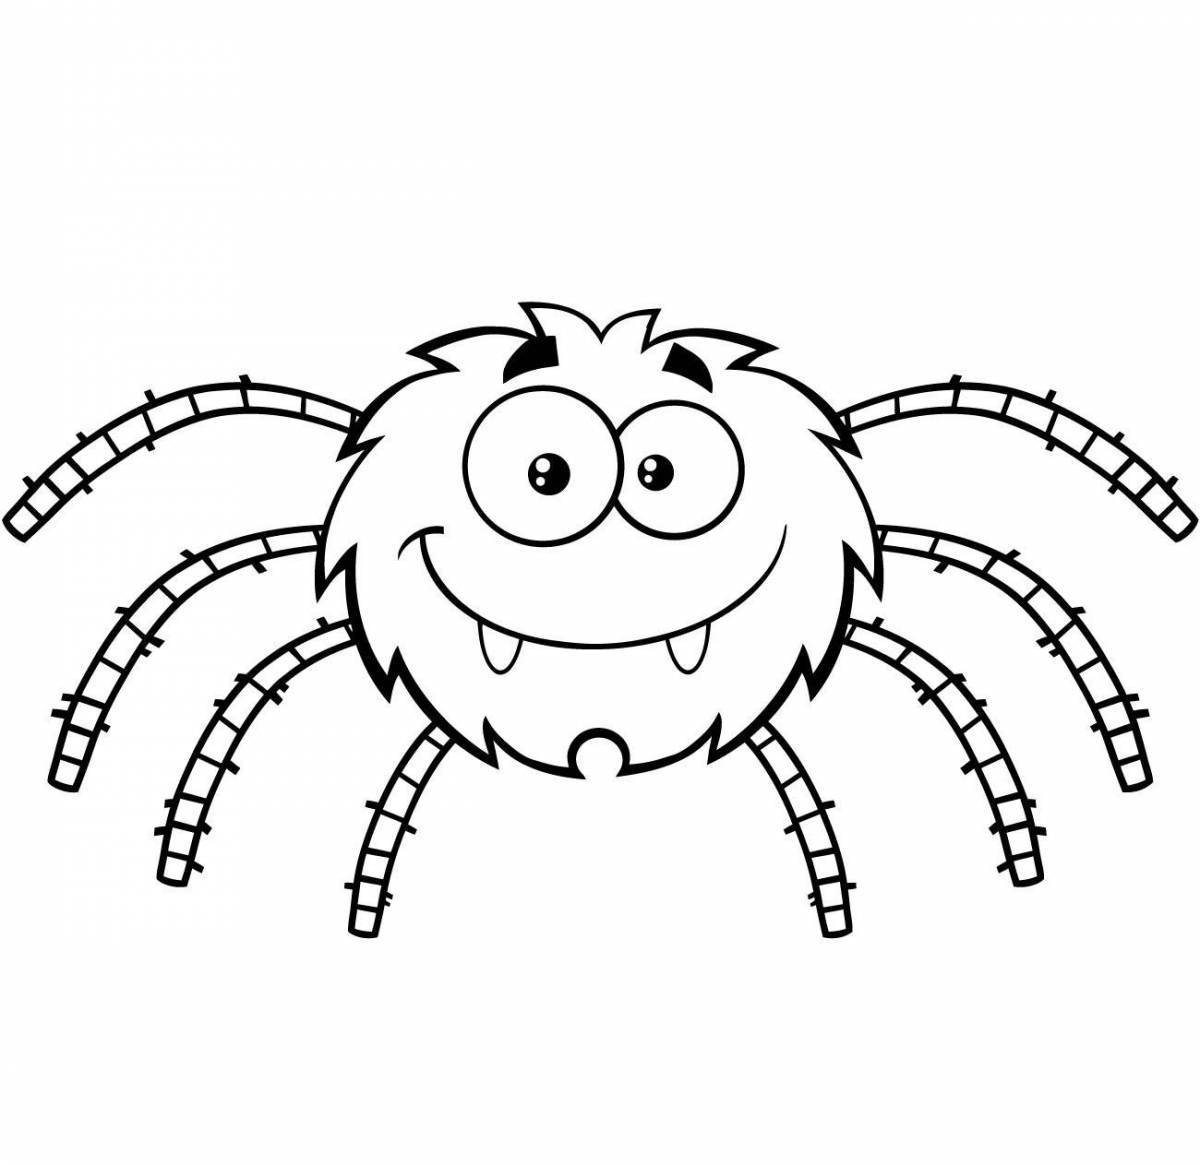 Spider for kids #7